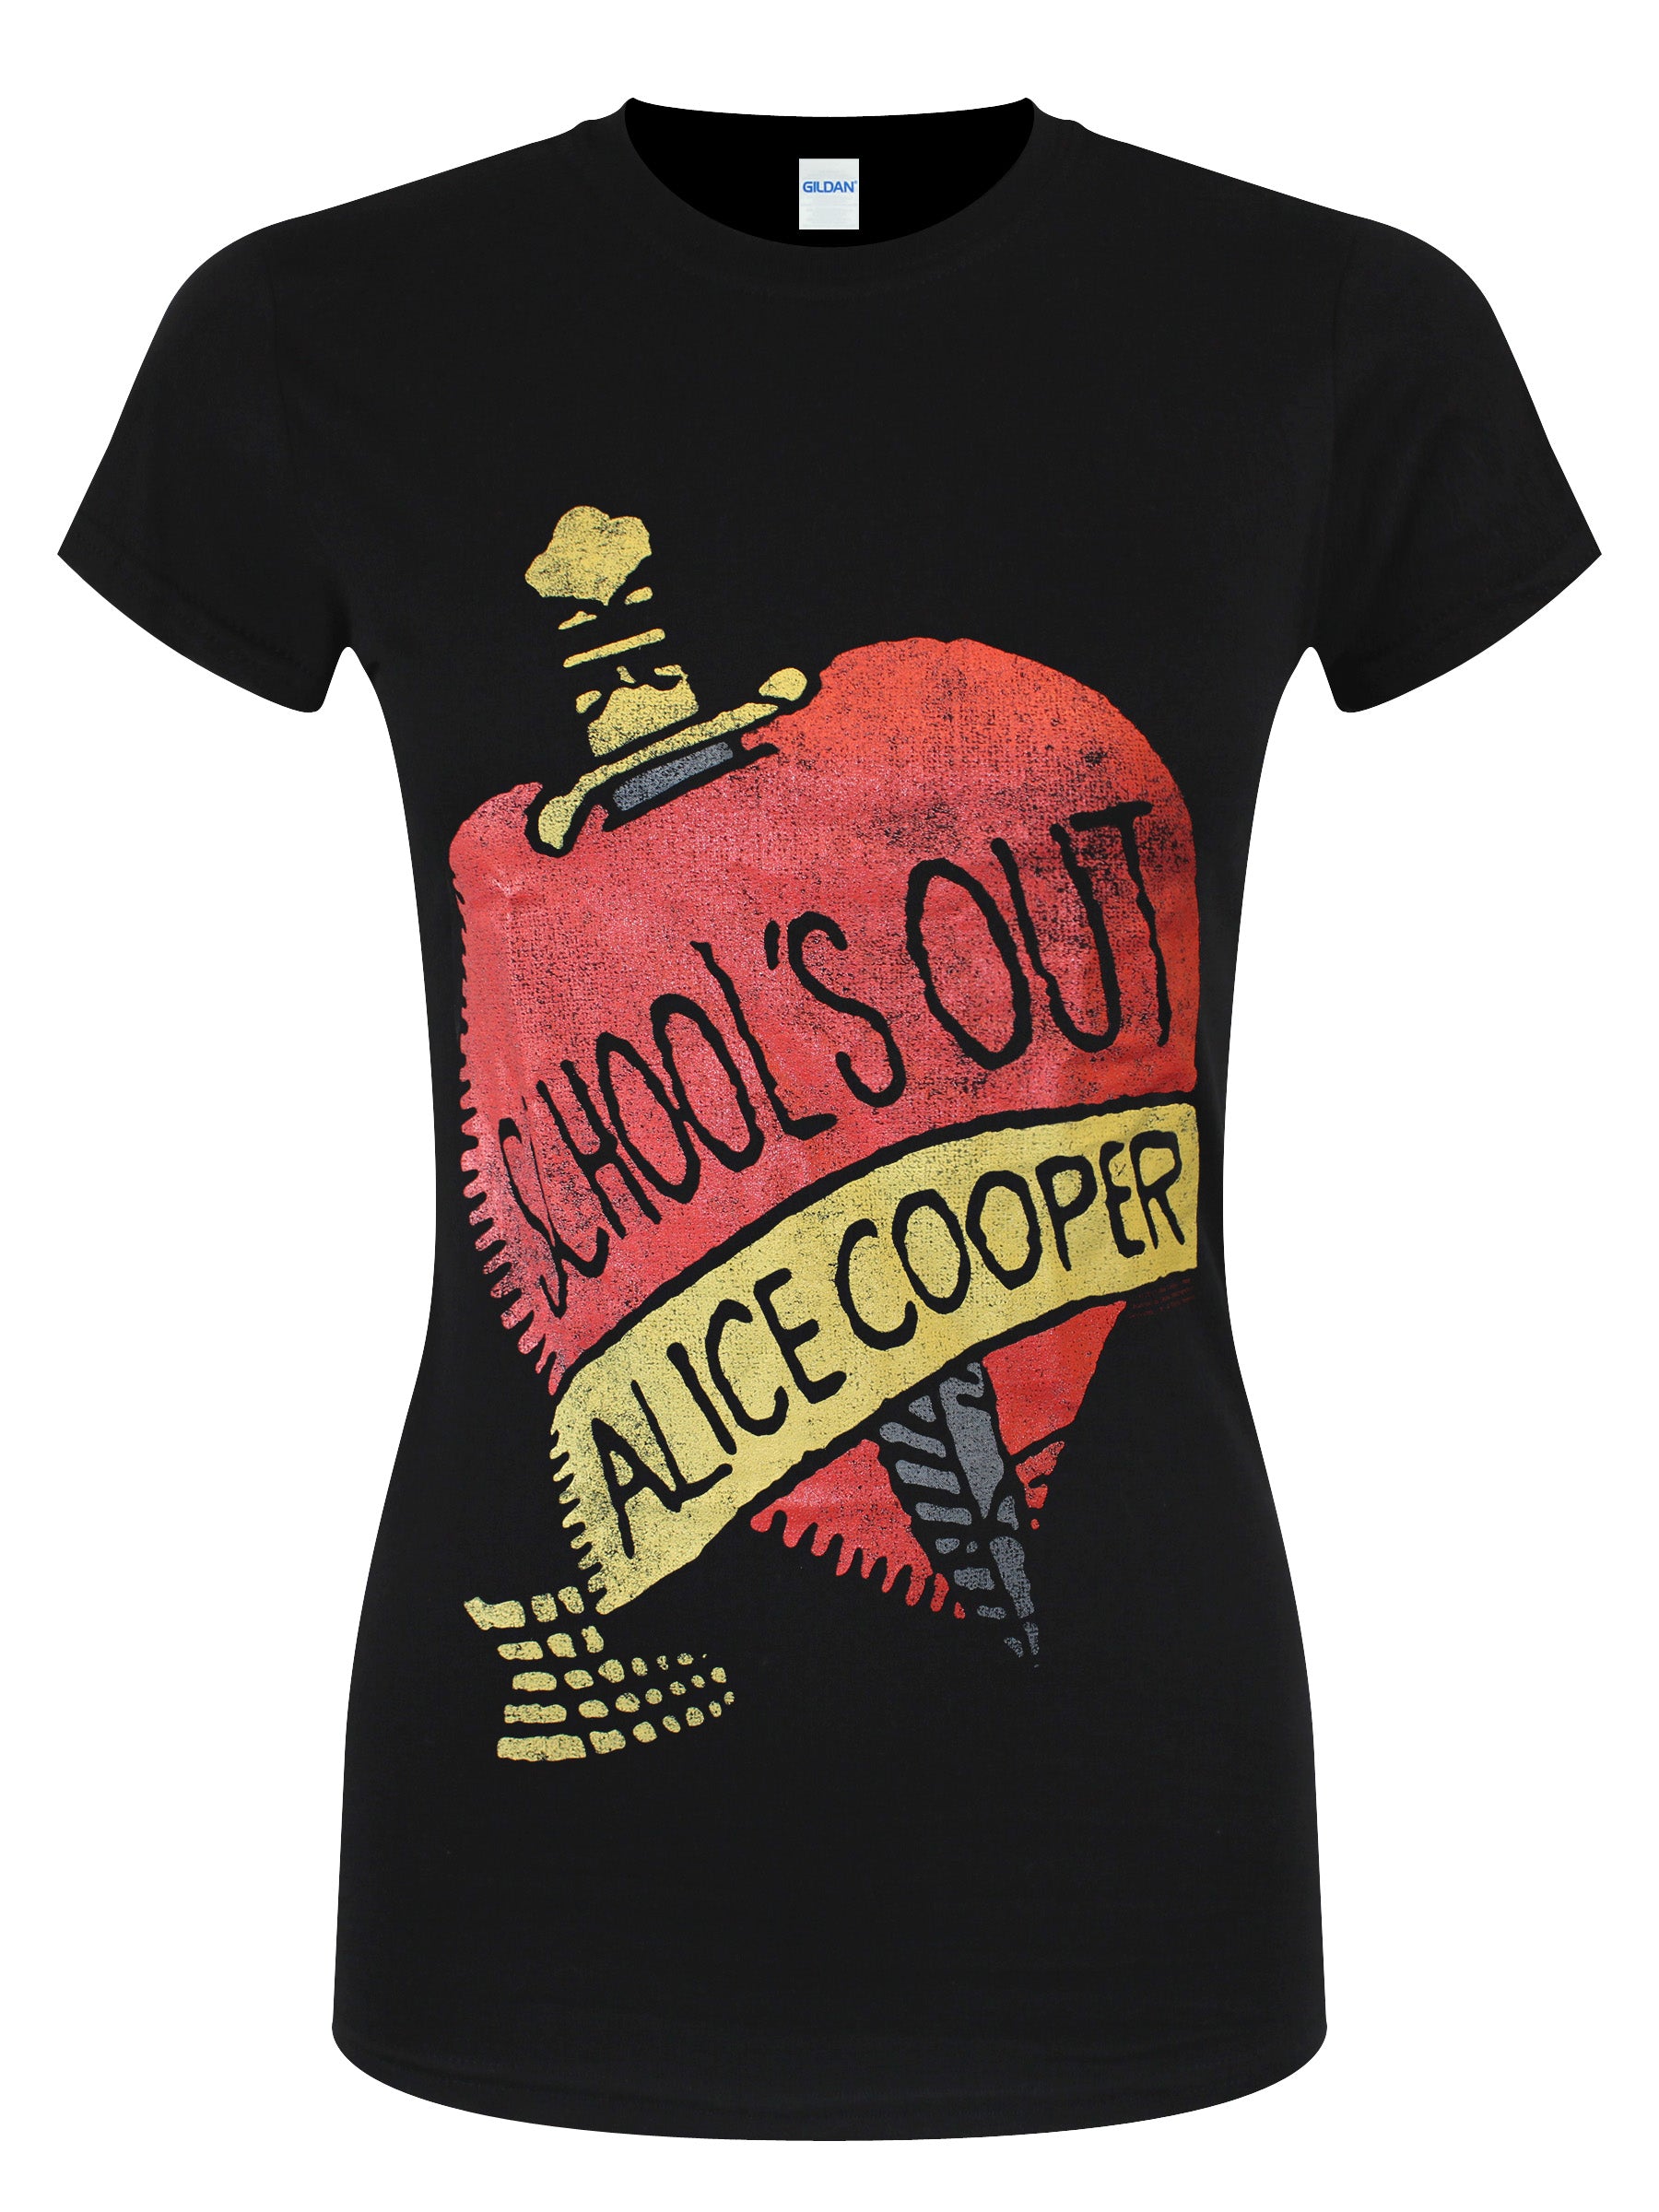 Alice Cooper School's Out Ladies Black T-Shirt